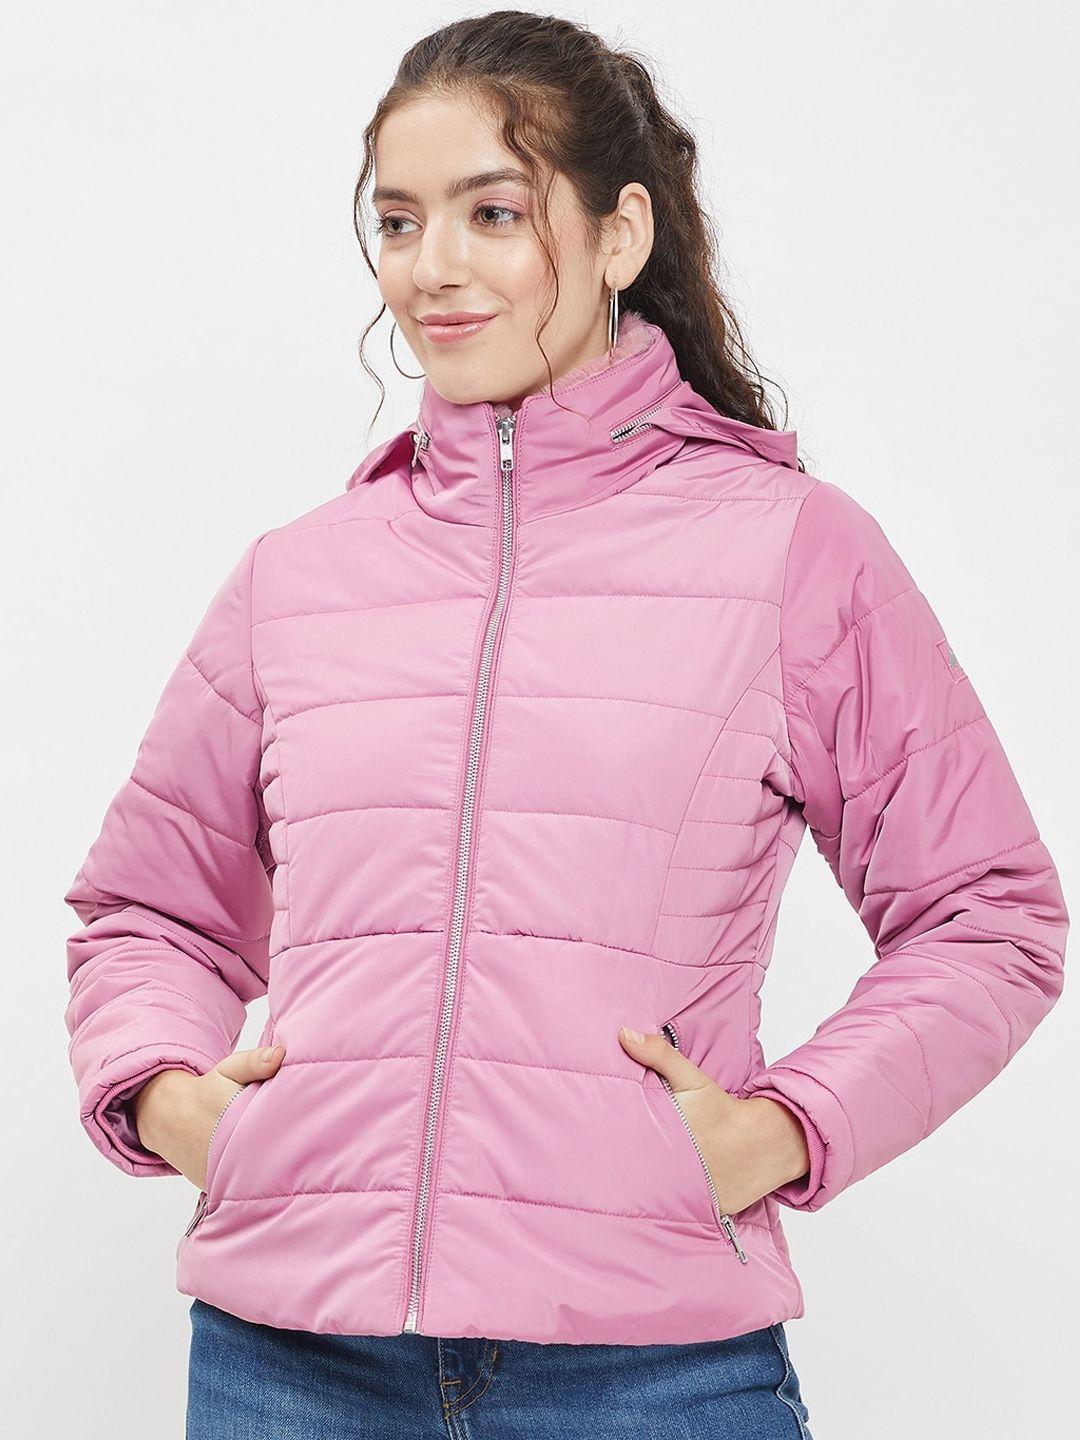 okane-women-pink-lightweight-fashion-jacket